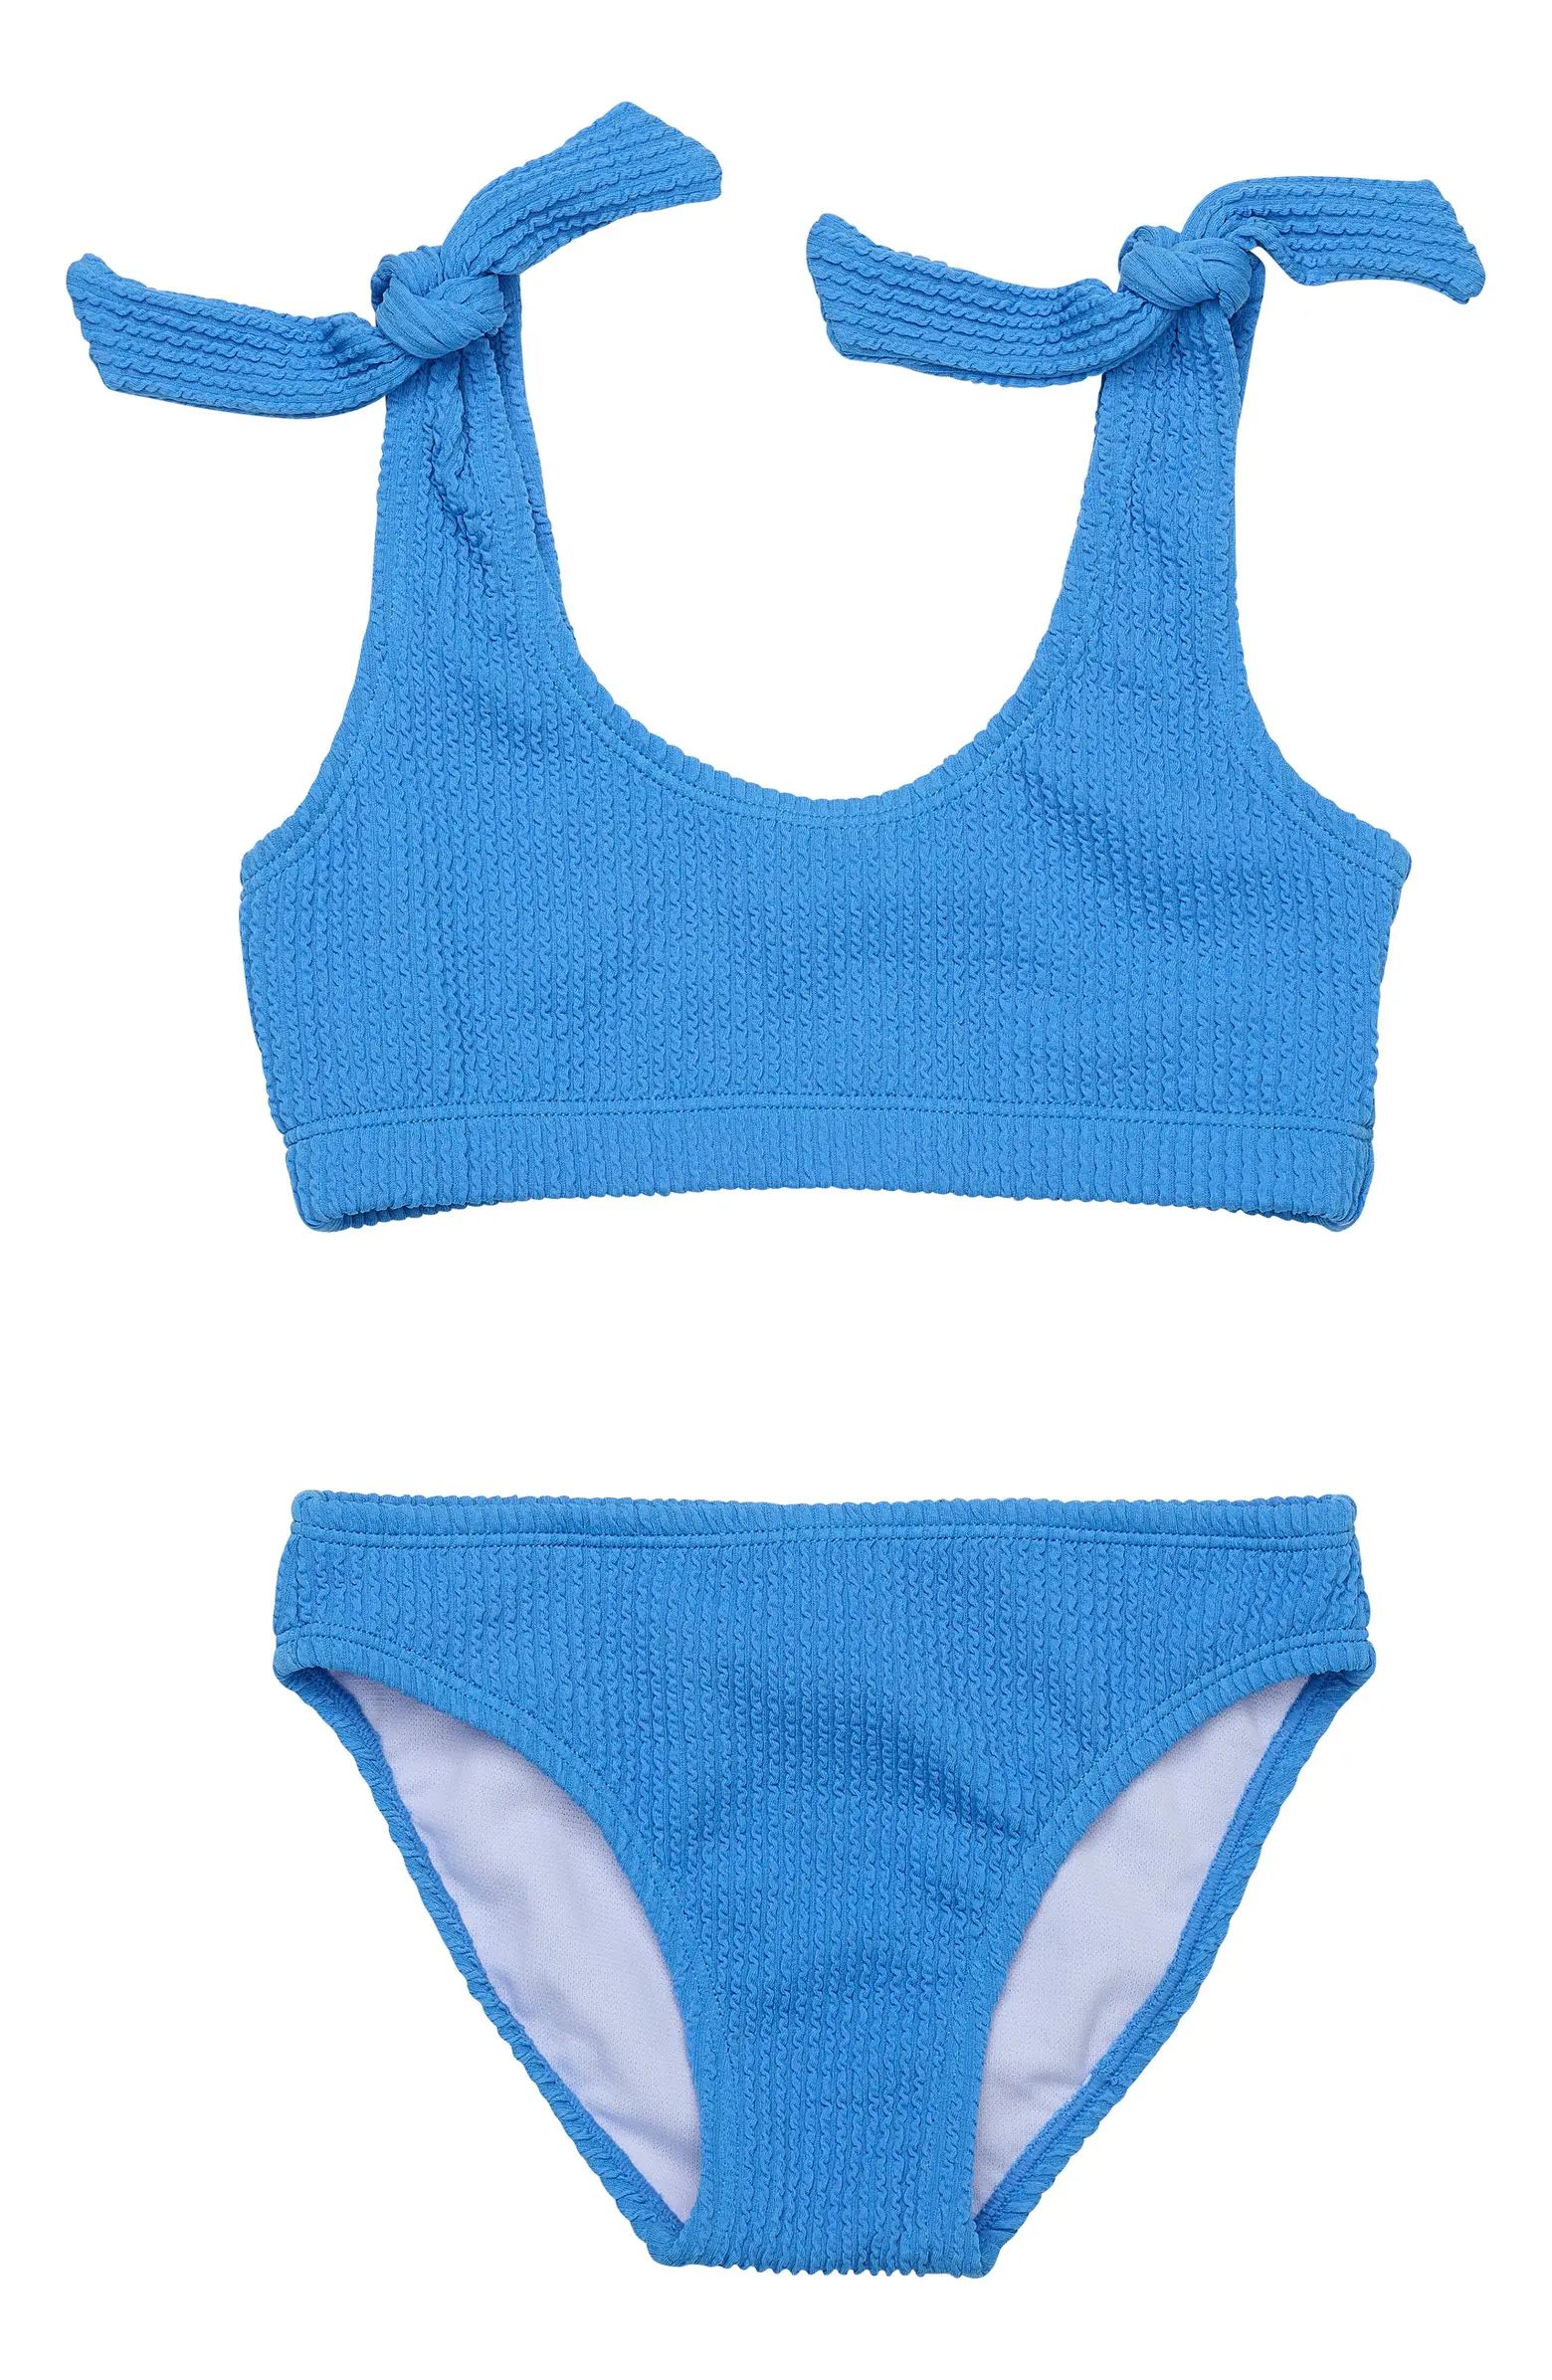 Kids' Marine Blue Two-Piece Swimsuit | Nordstrom